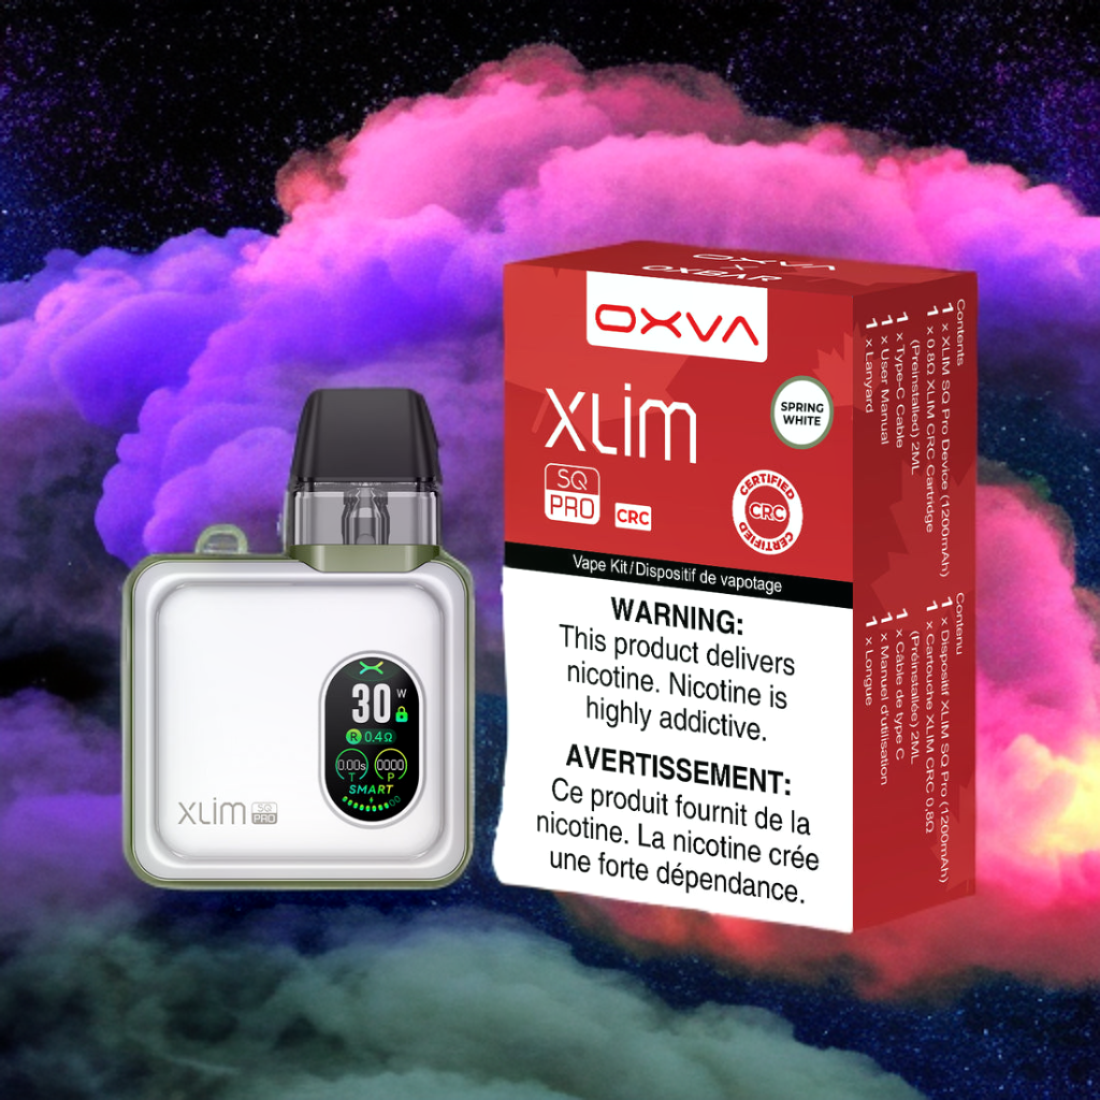 OXVA XLIM SQ Pro Kit